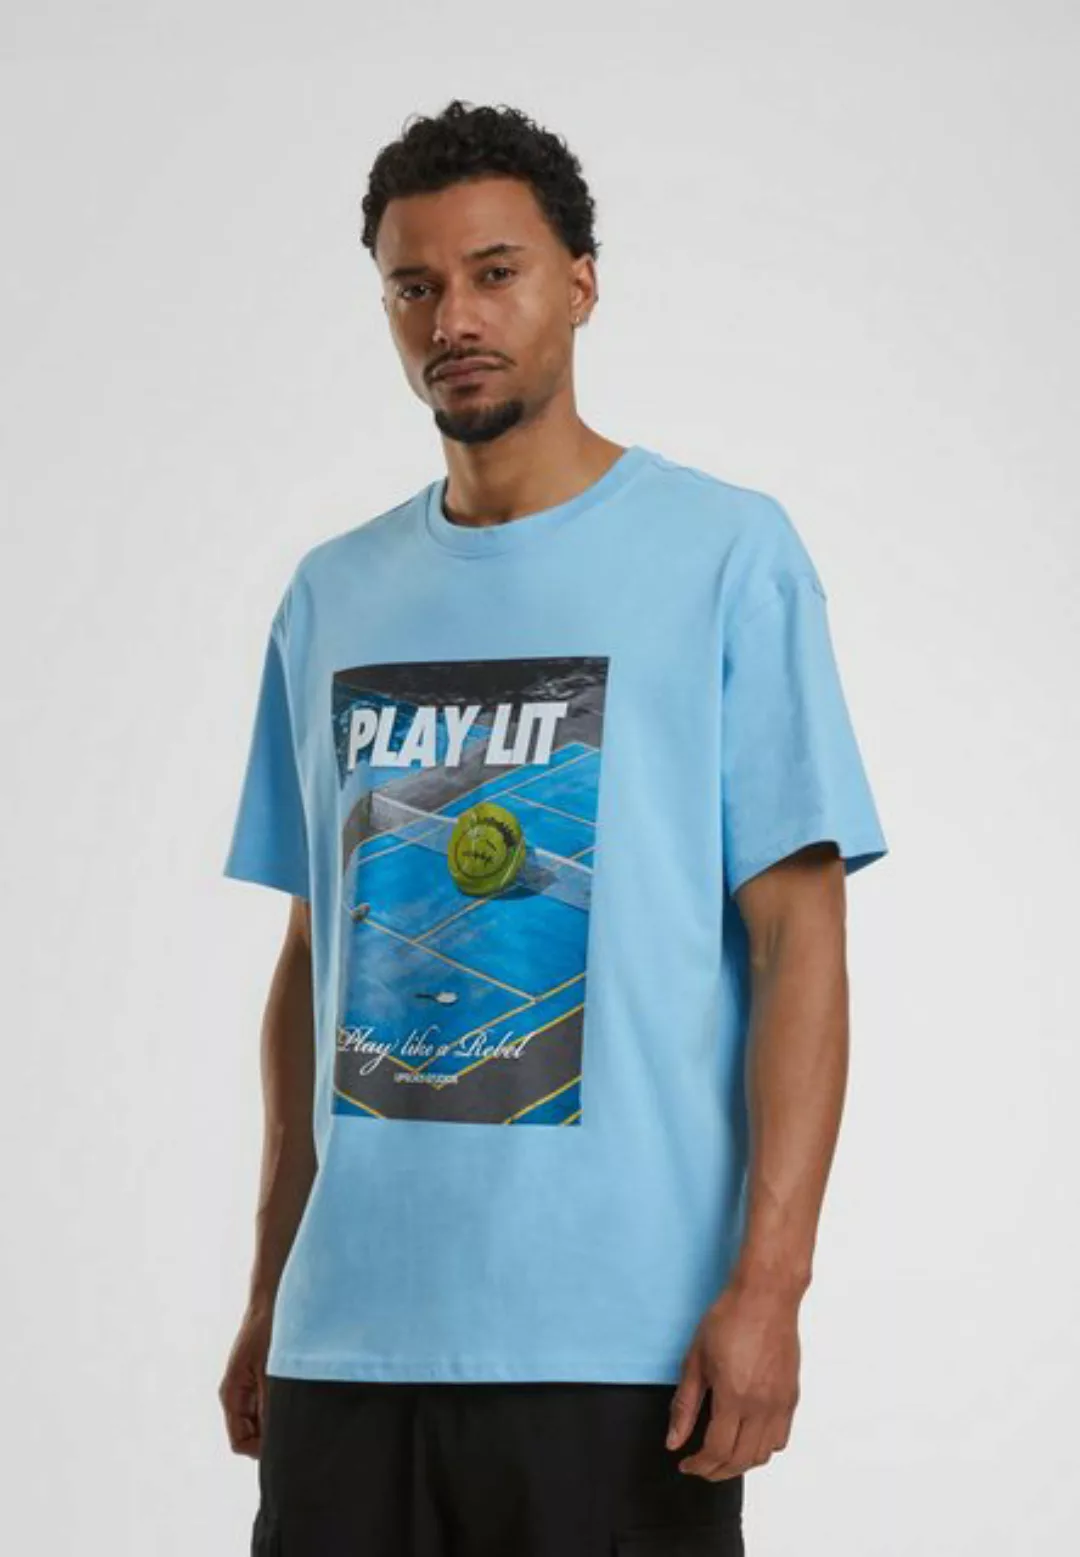 Upscale by Mister Tee T-Shirt Upscale by Mister Tee Herren PlayLit Heavy Ov günstig online kaufen